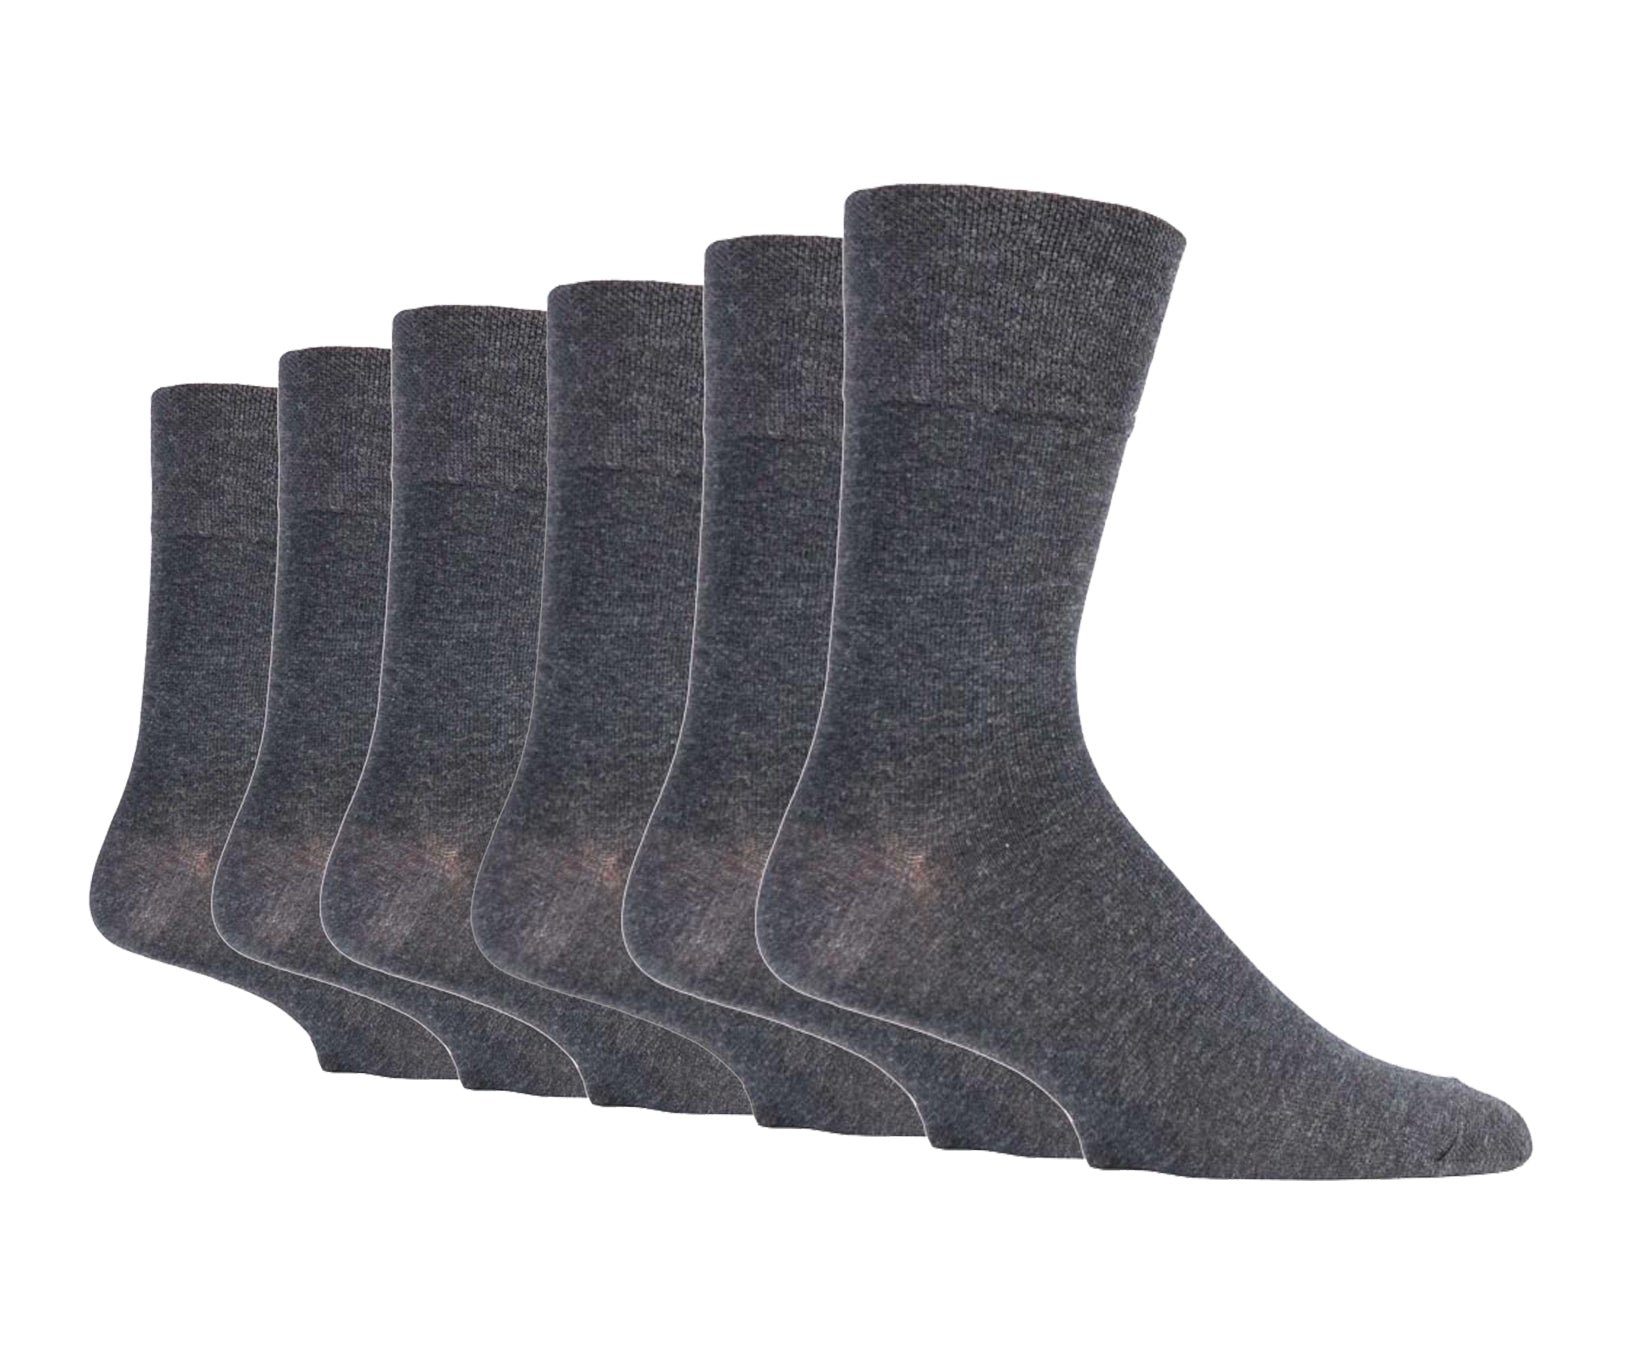 6 Pairs Men's Gentle Grip Cotton Socks Charcoal